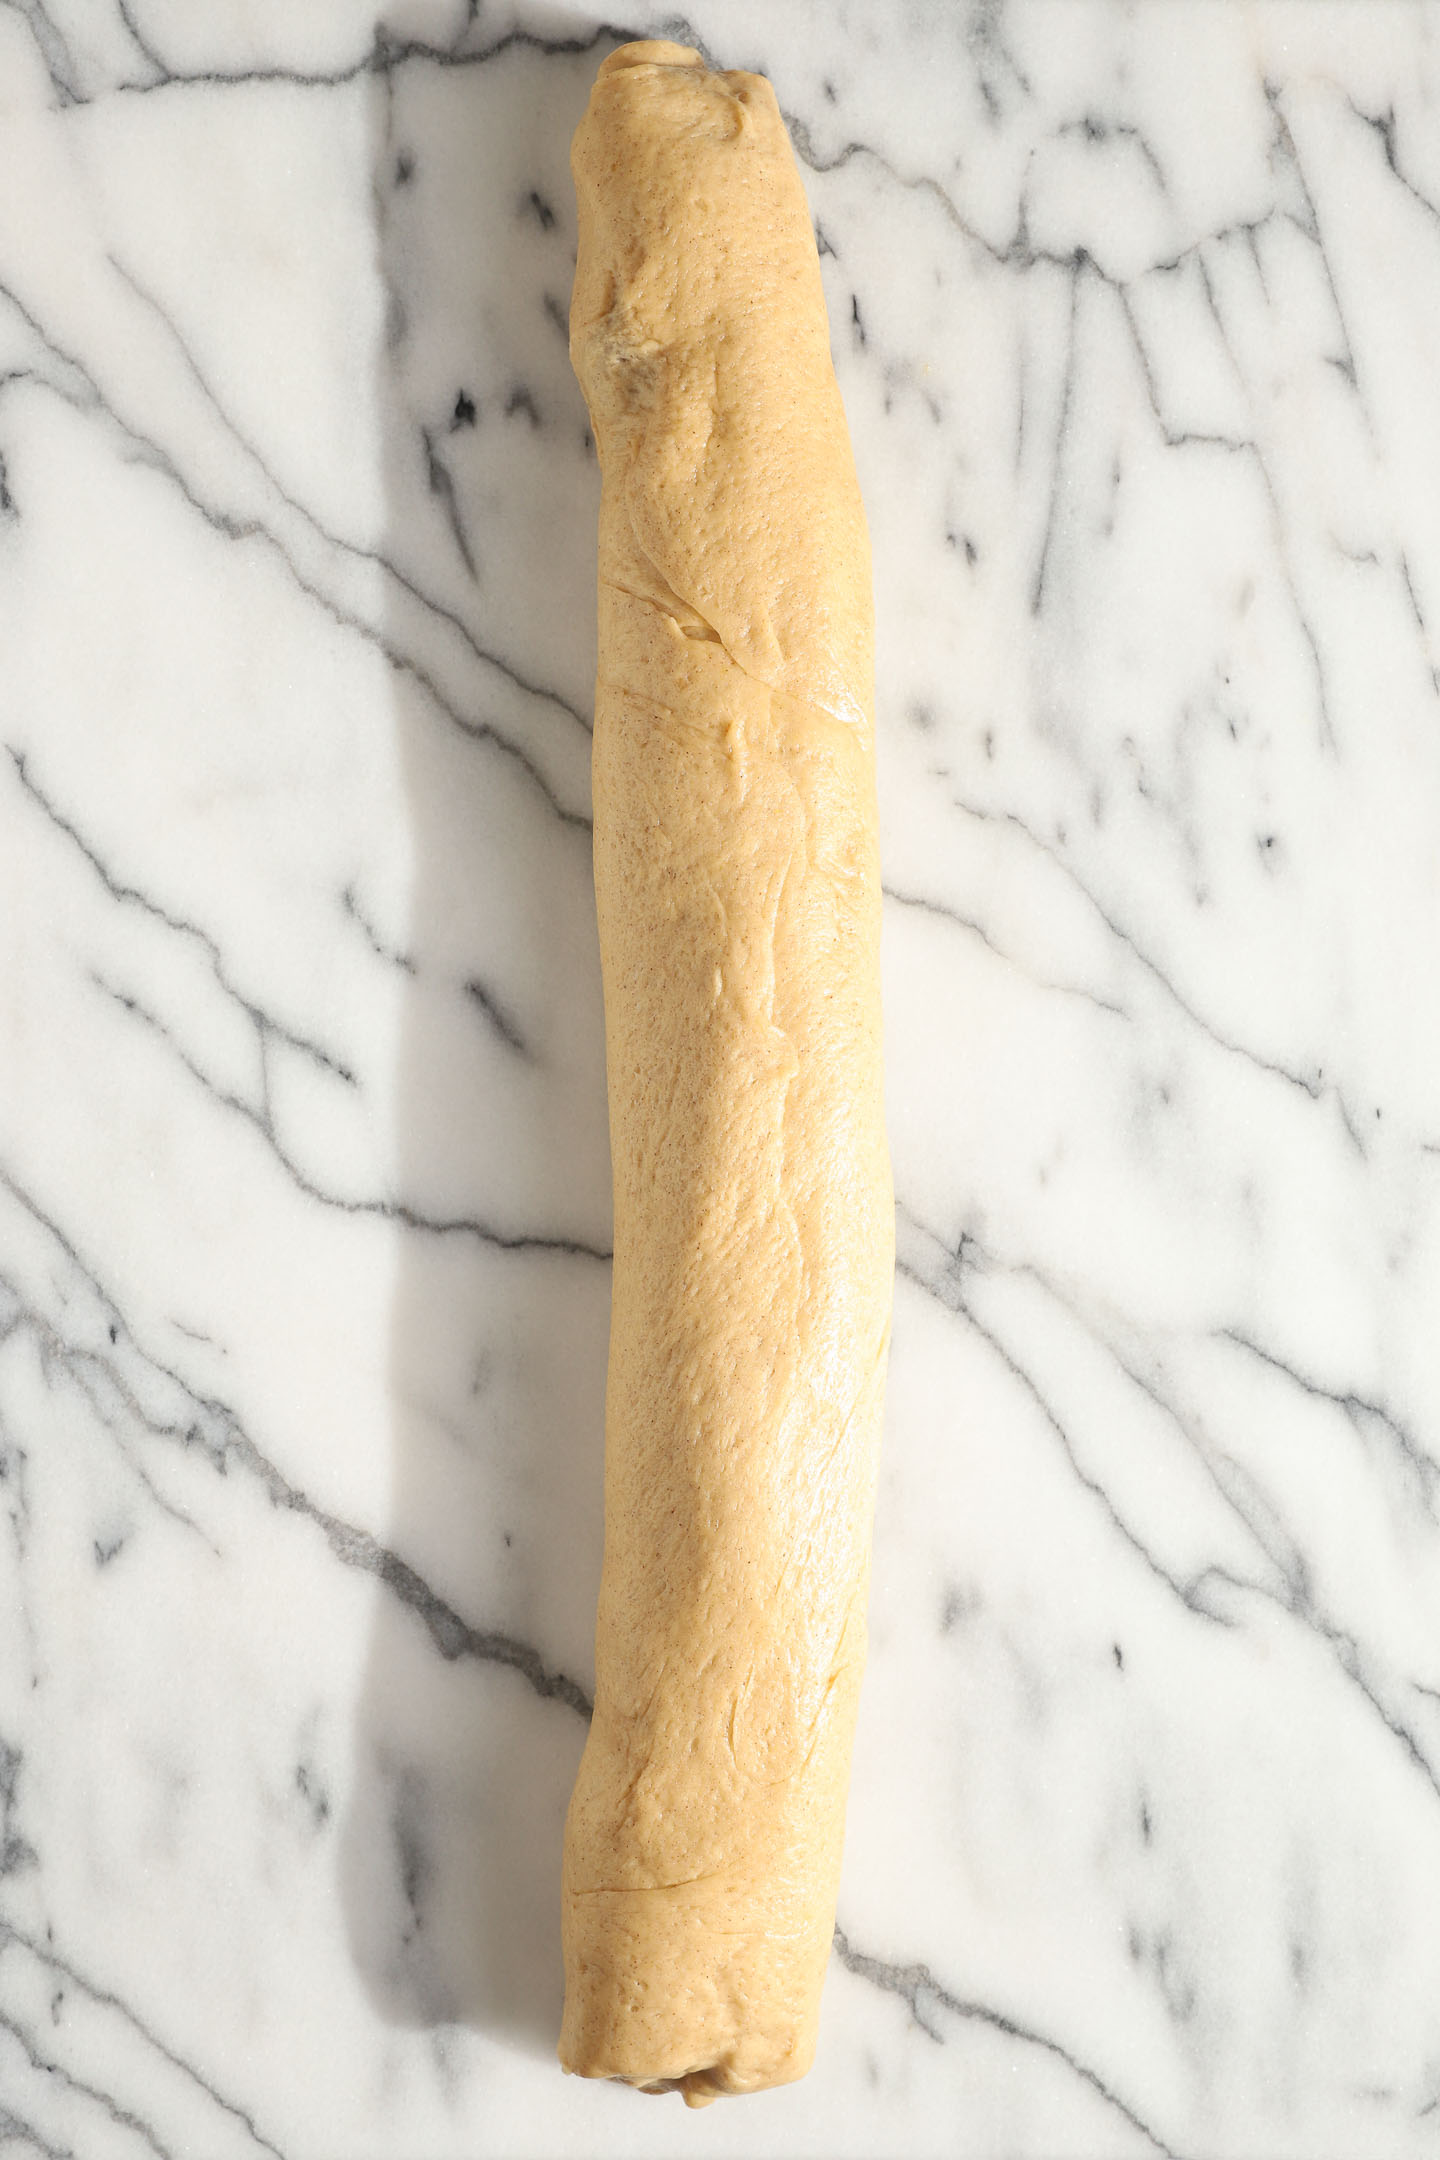 apple babka dough log before being shaped